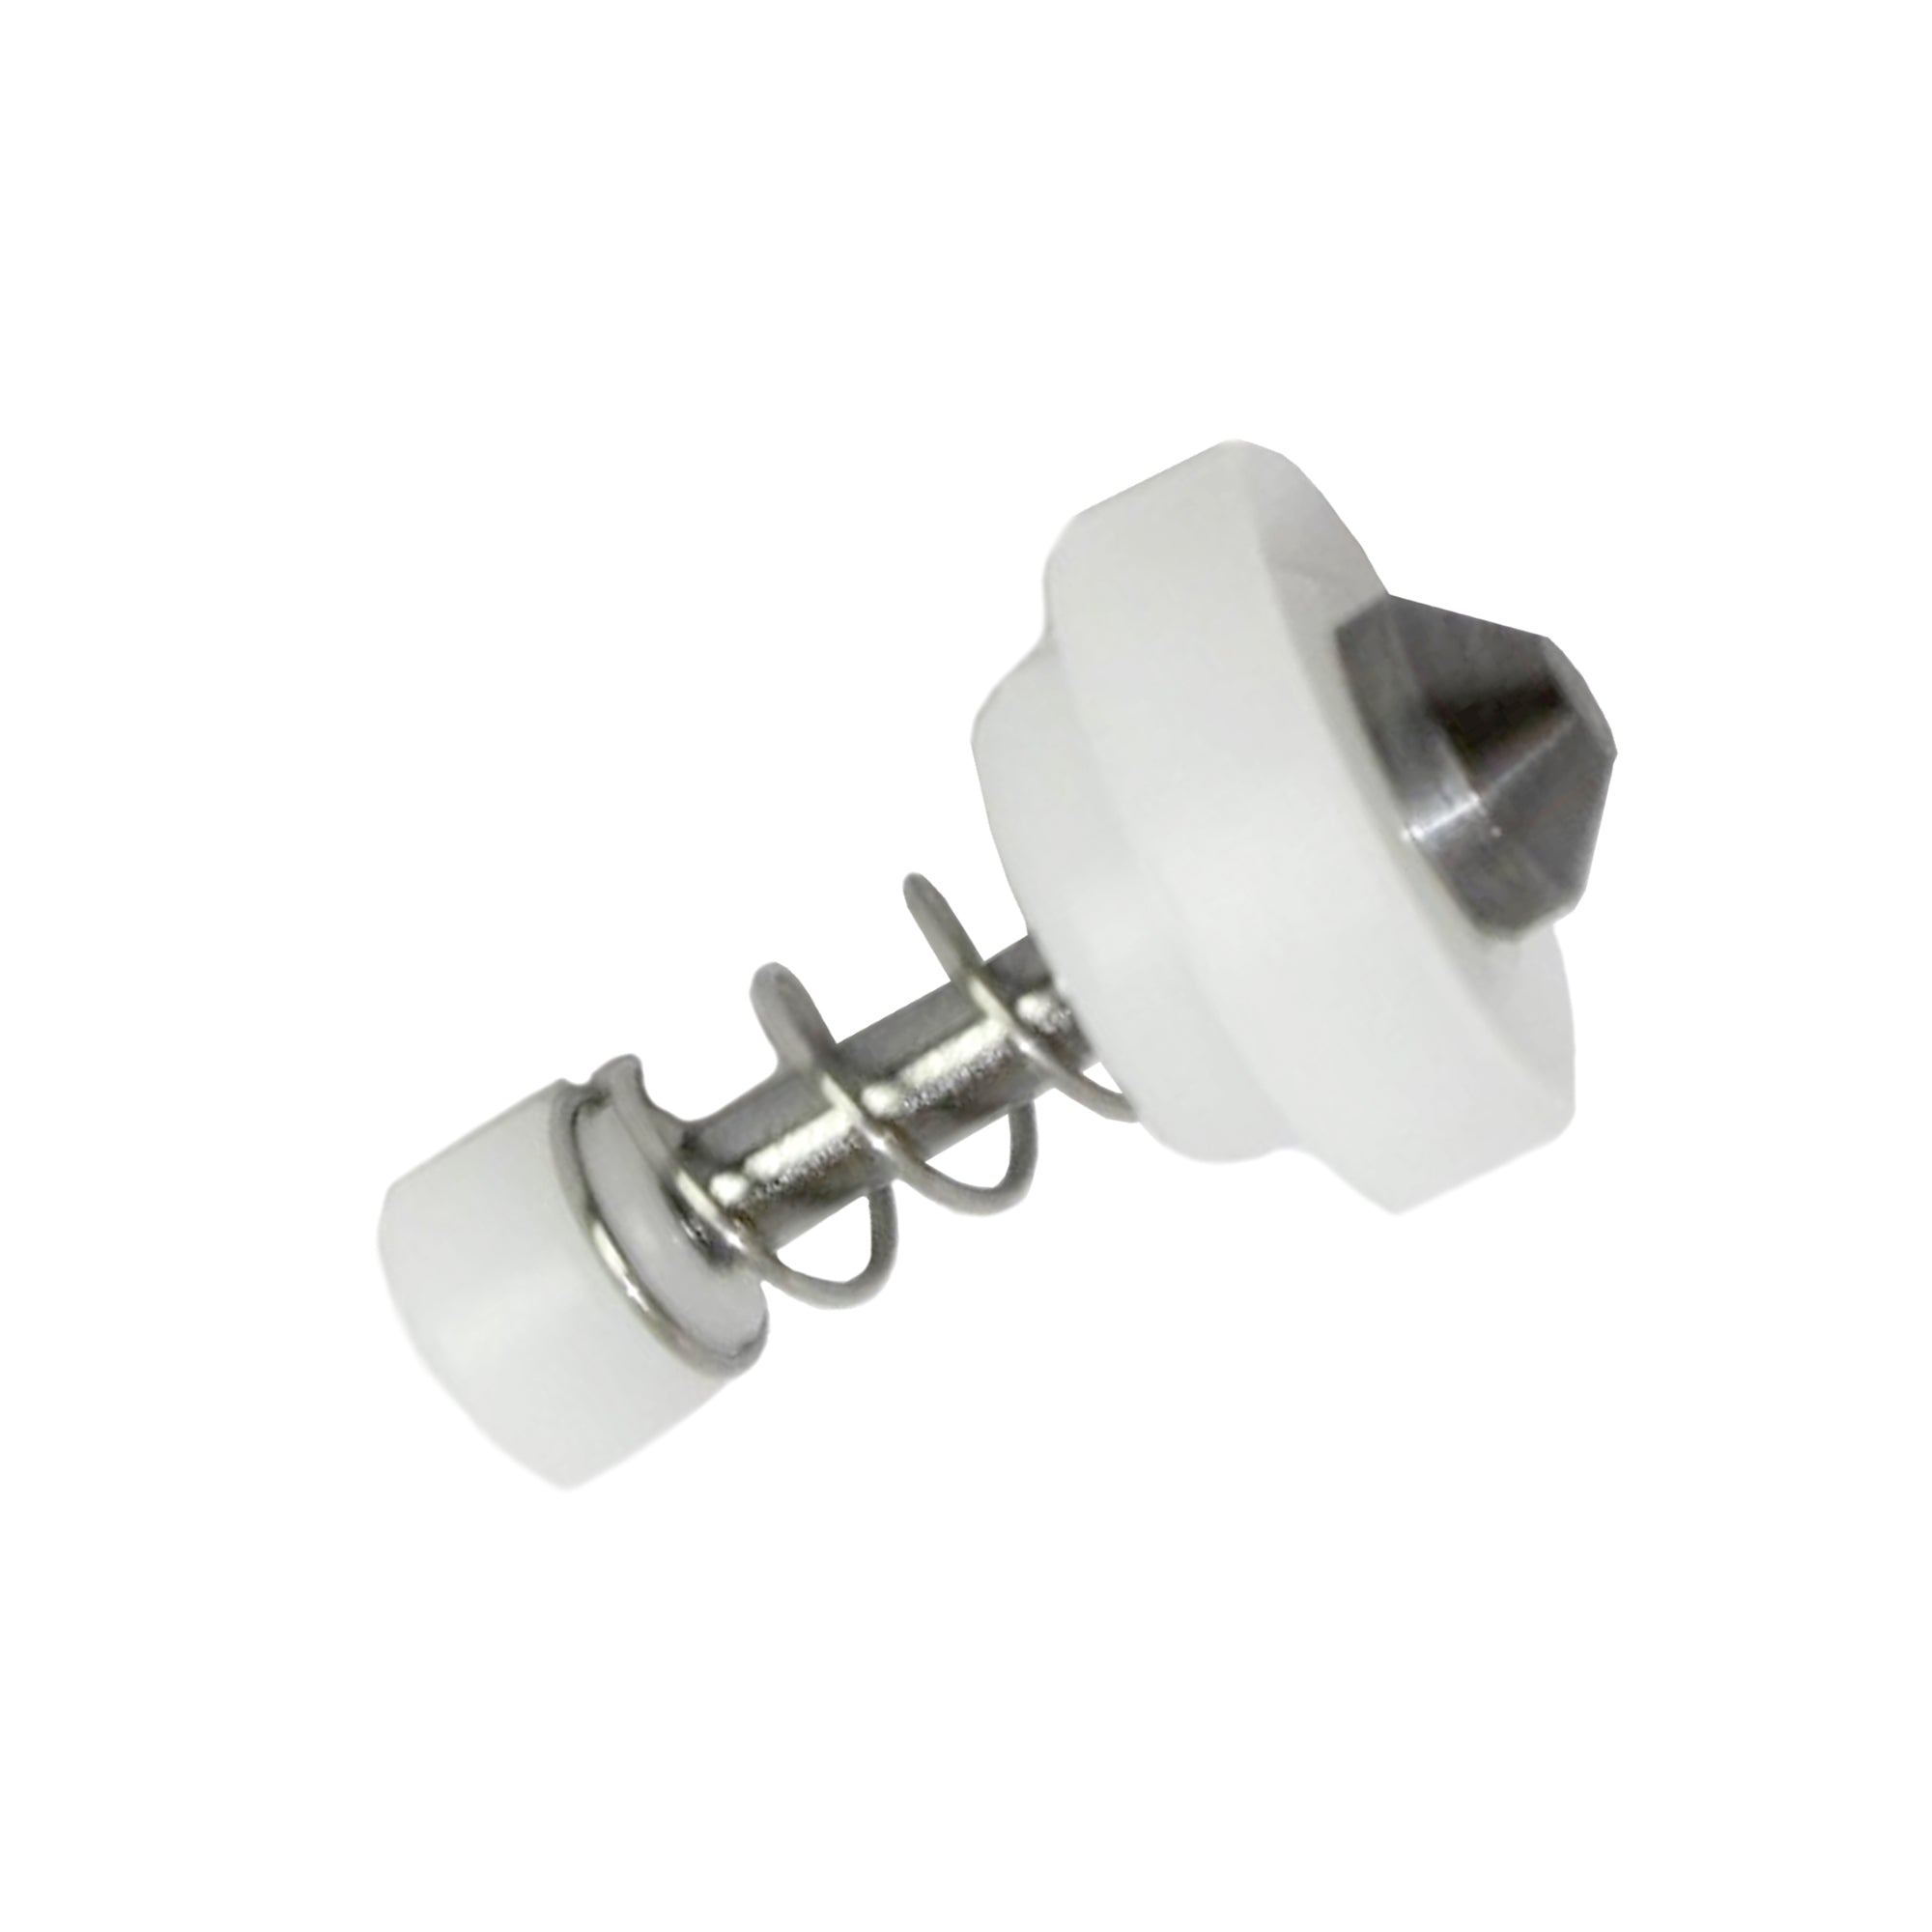 296722 -Check valve assembly (pack of 10) - PURspray